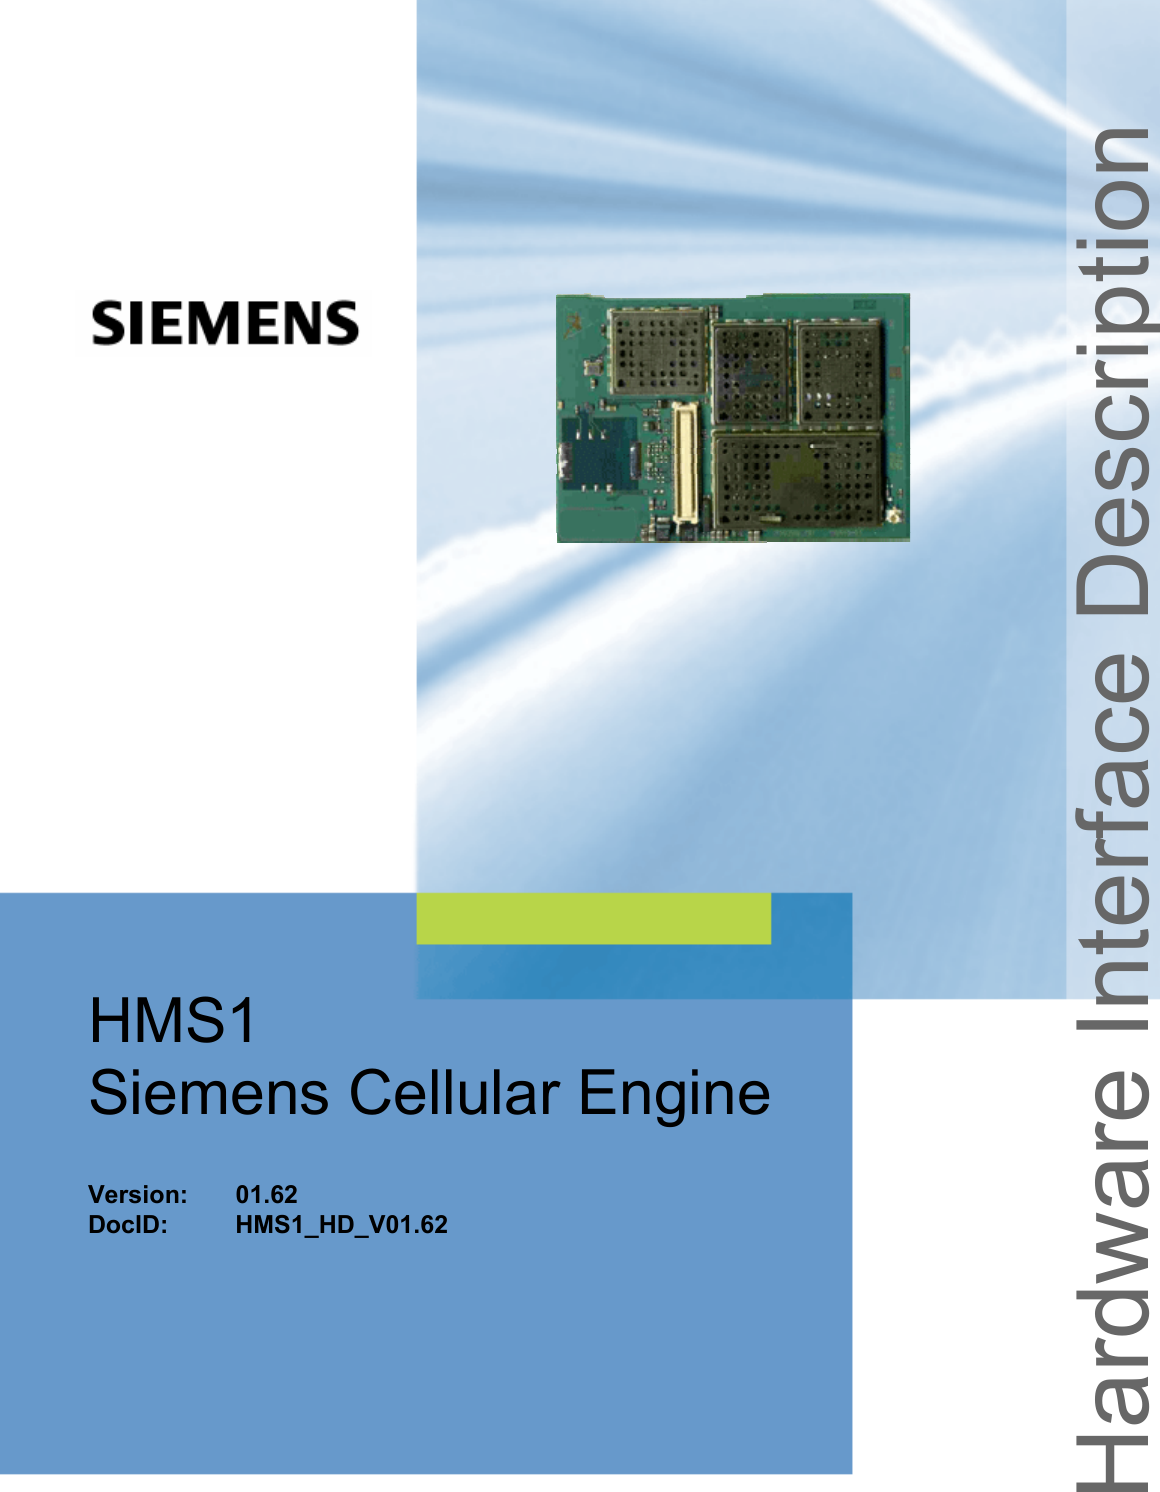                                                     Hardware Interface Description HMS1 Siemens Cellular Engine   Version: 01.62 DocID: HMS1_HD_V01.62 